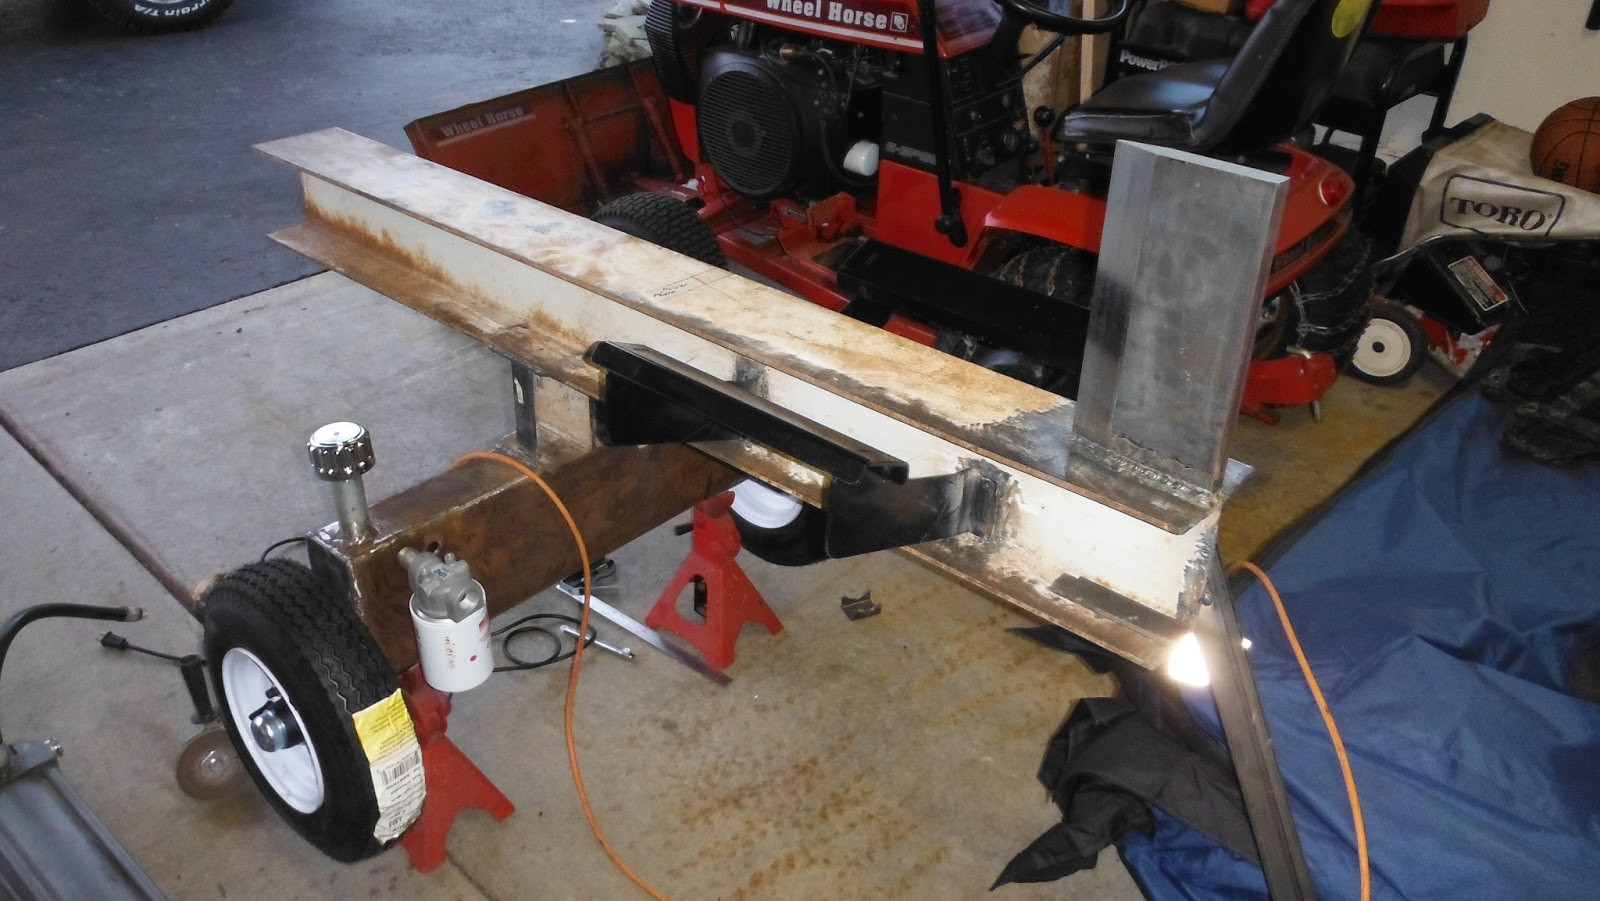 Best ideas about DIY Log Splitter
. Save or Pin Building my homemade log splitter Now.